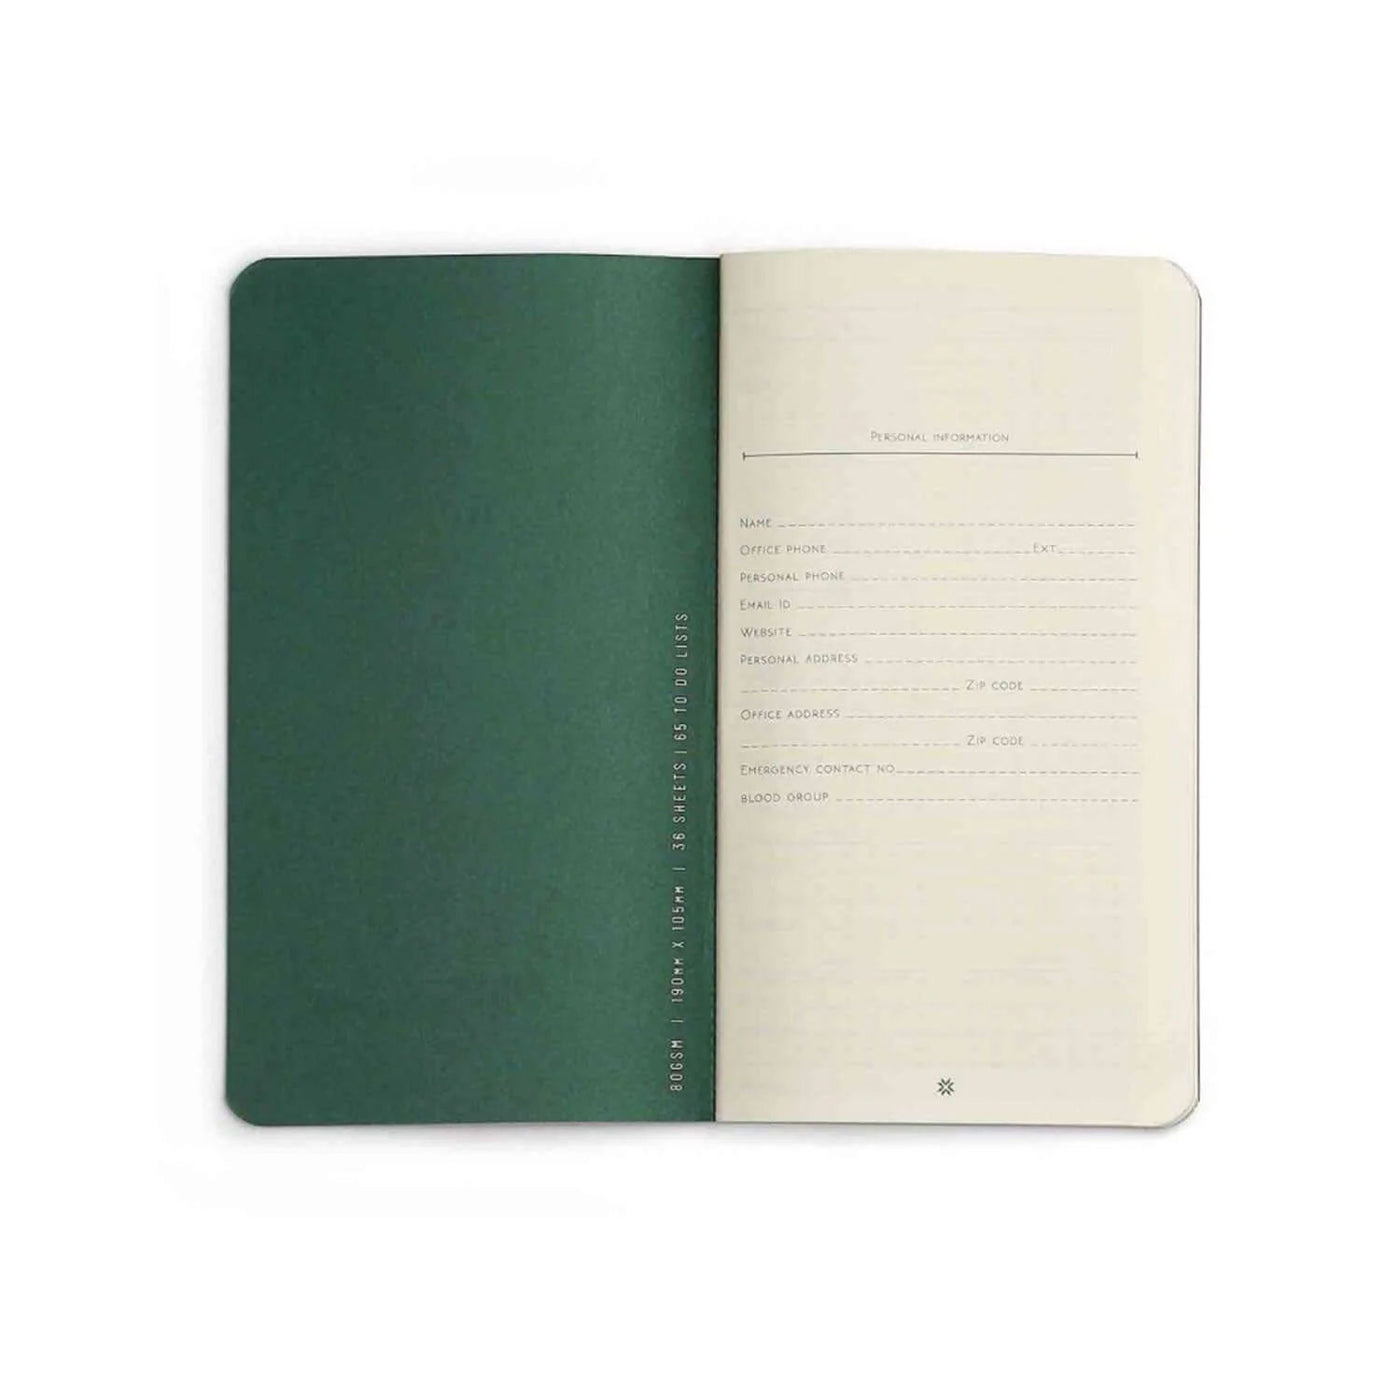 Pennline Quikfill Notebook Refill For Quikrite, Green - Set Of 2 6